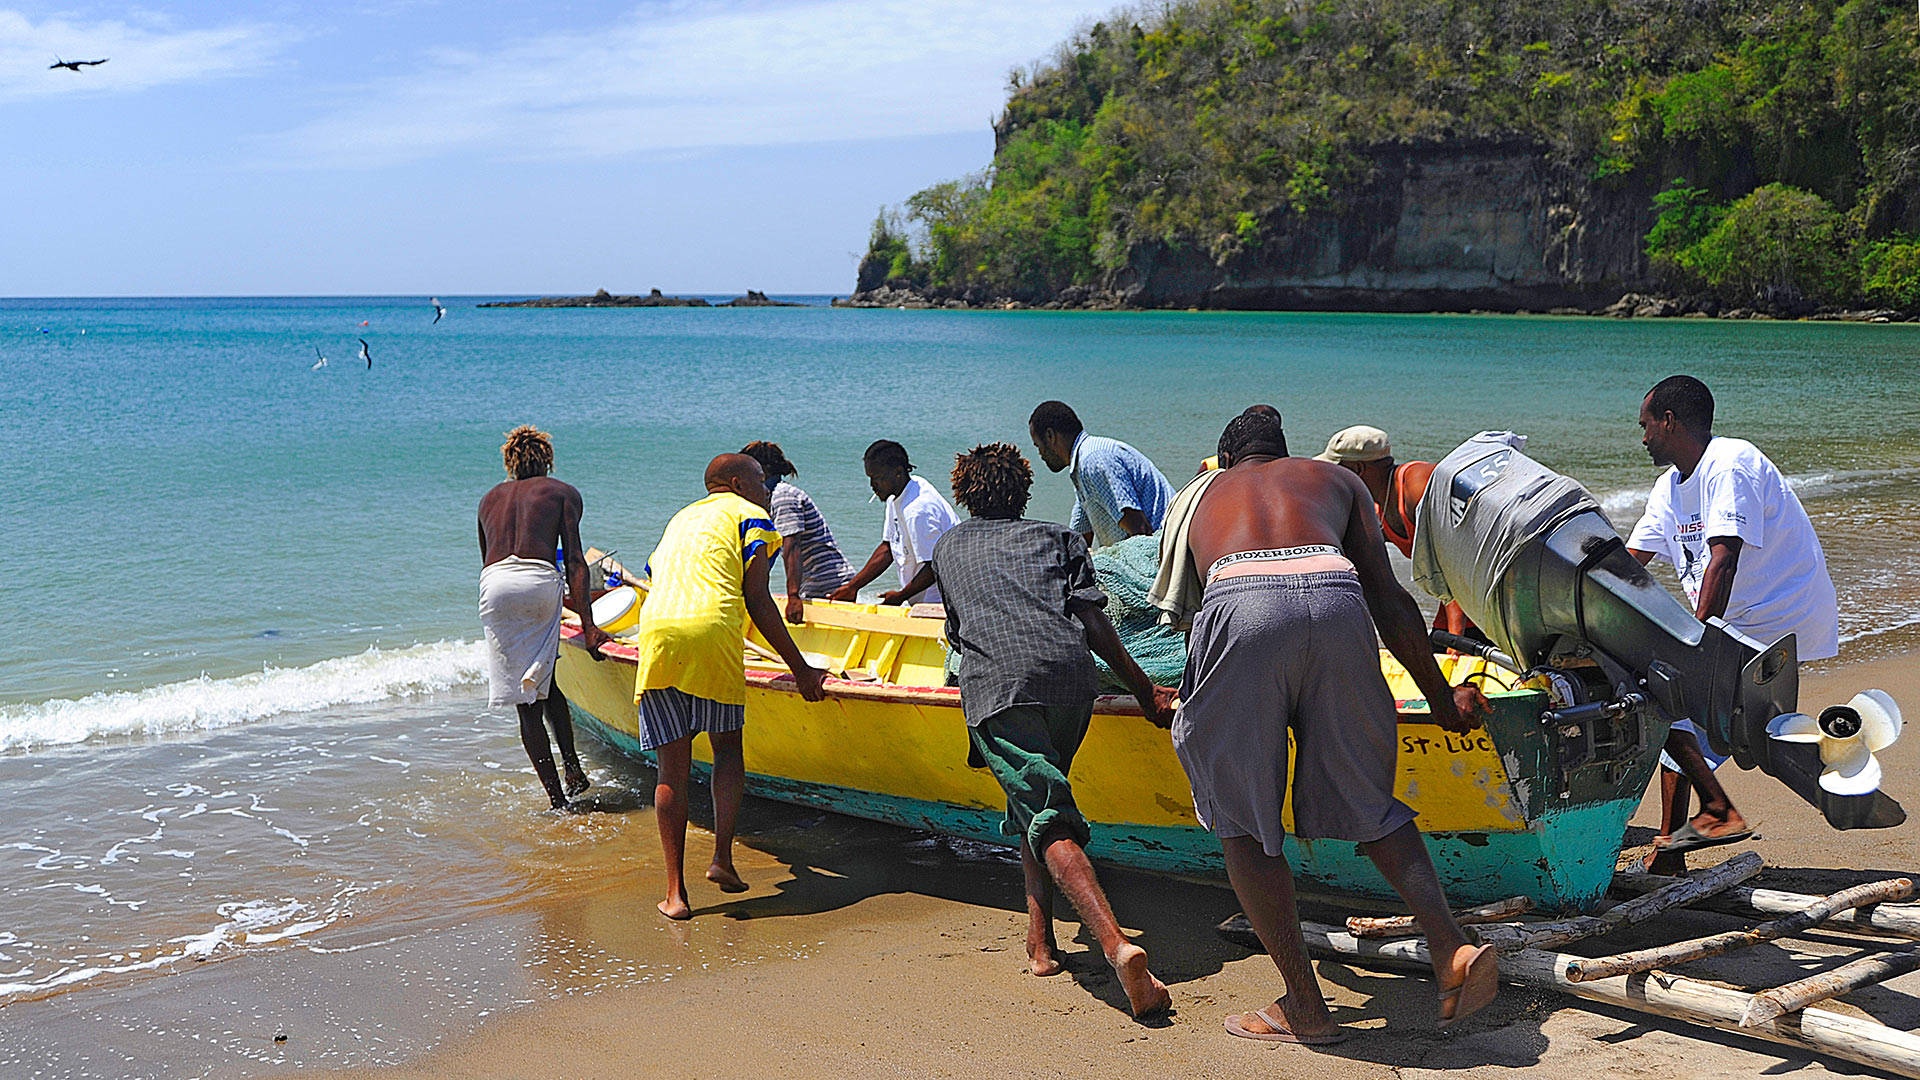 St. Lucia Men Pushing A Boat Wallpaper